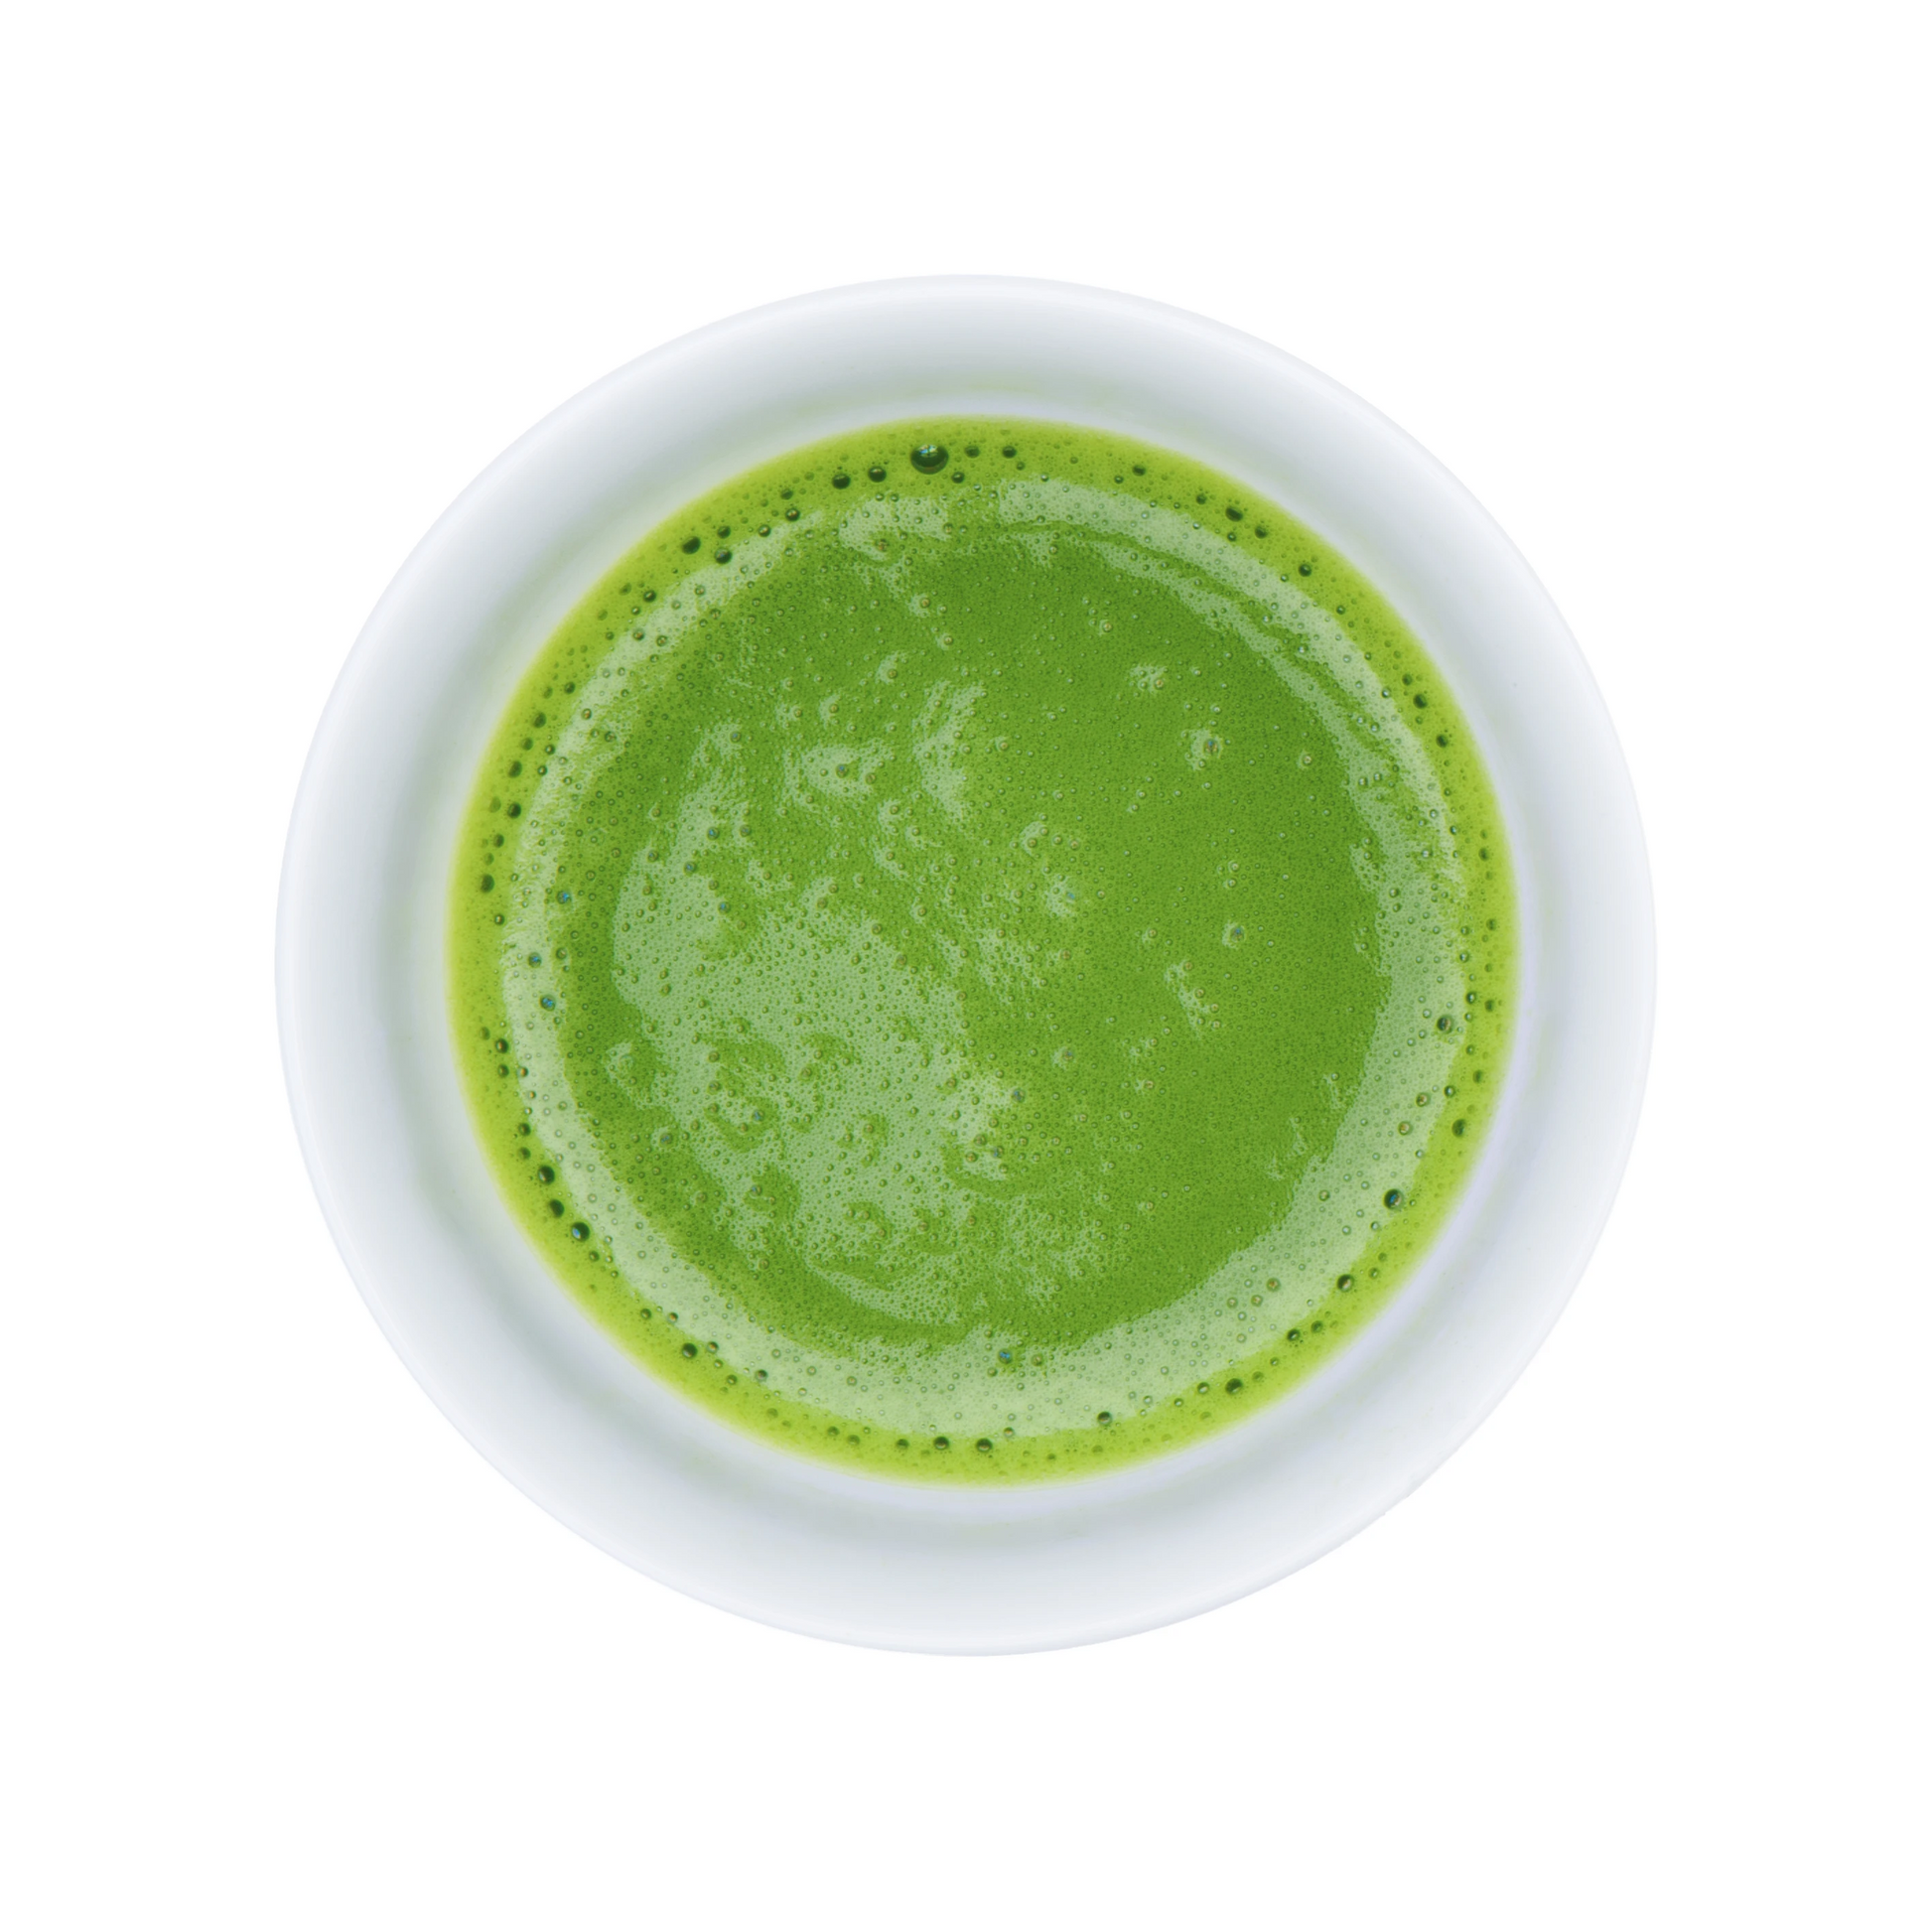 Image of Prepared ceremonial grade matcha green tea | Kato Matcha Green Tea Powder | Spring Harvest - Genuine Tea